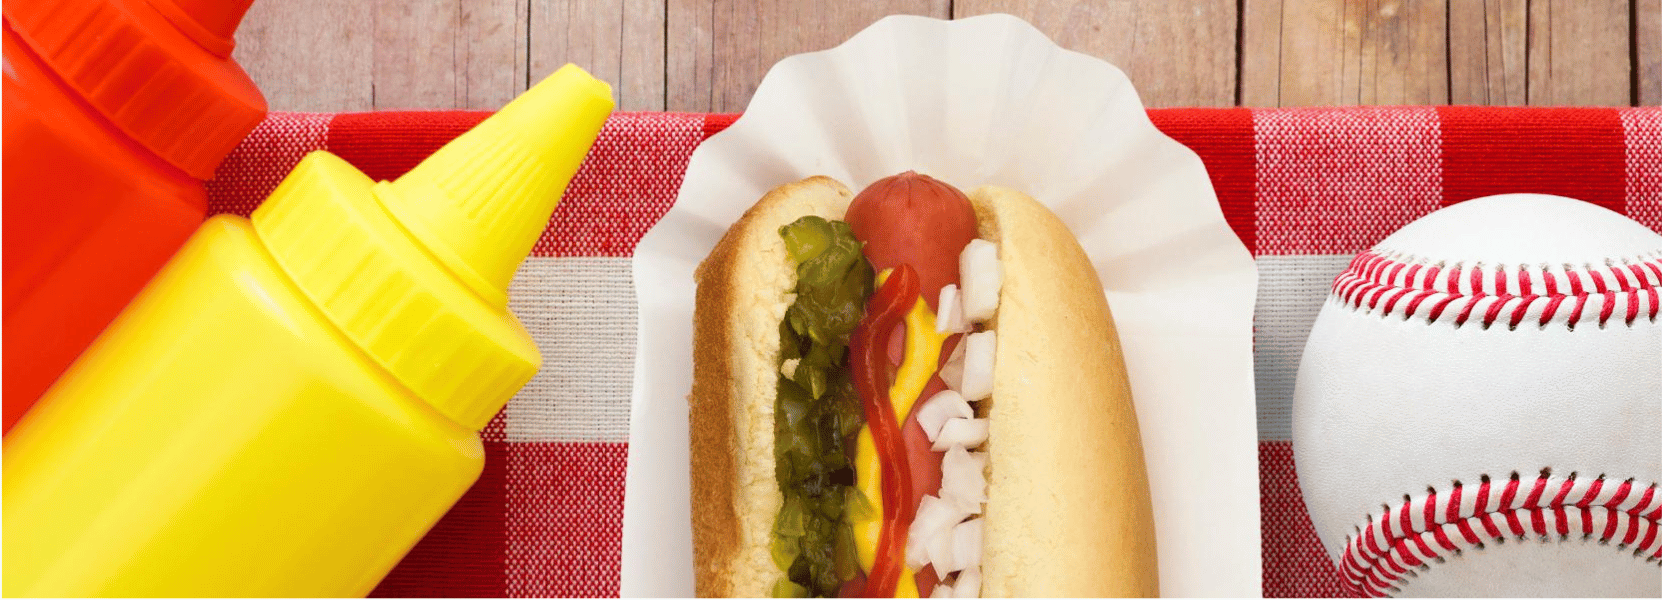 Hotdog with mustard next to a basceball